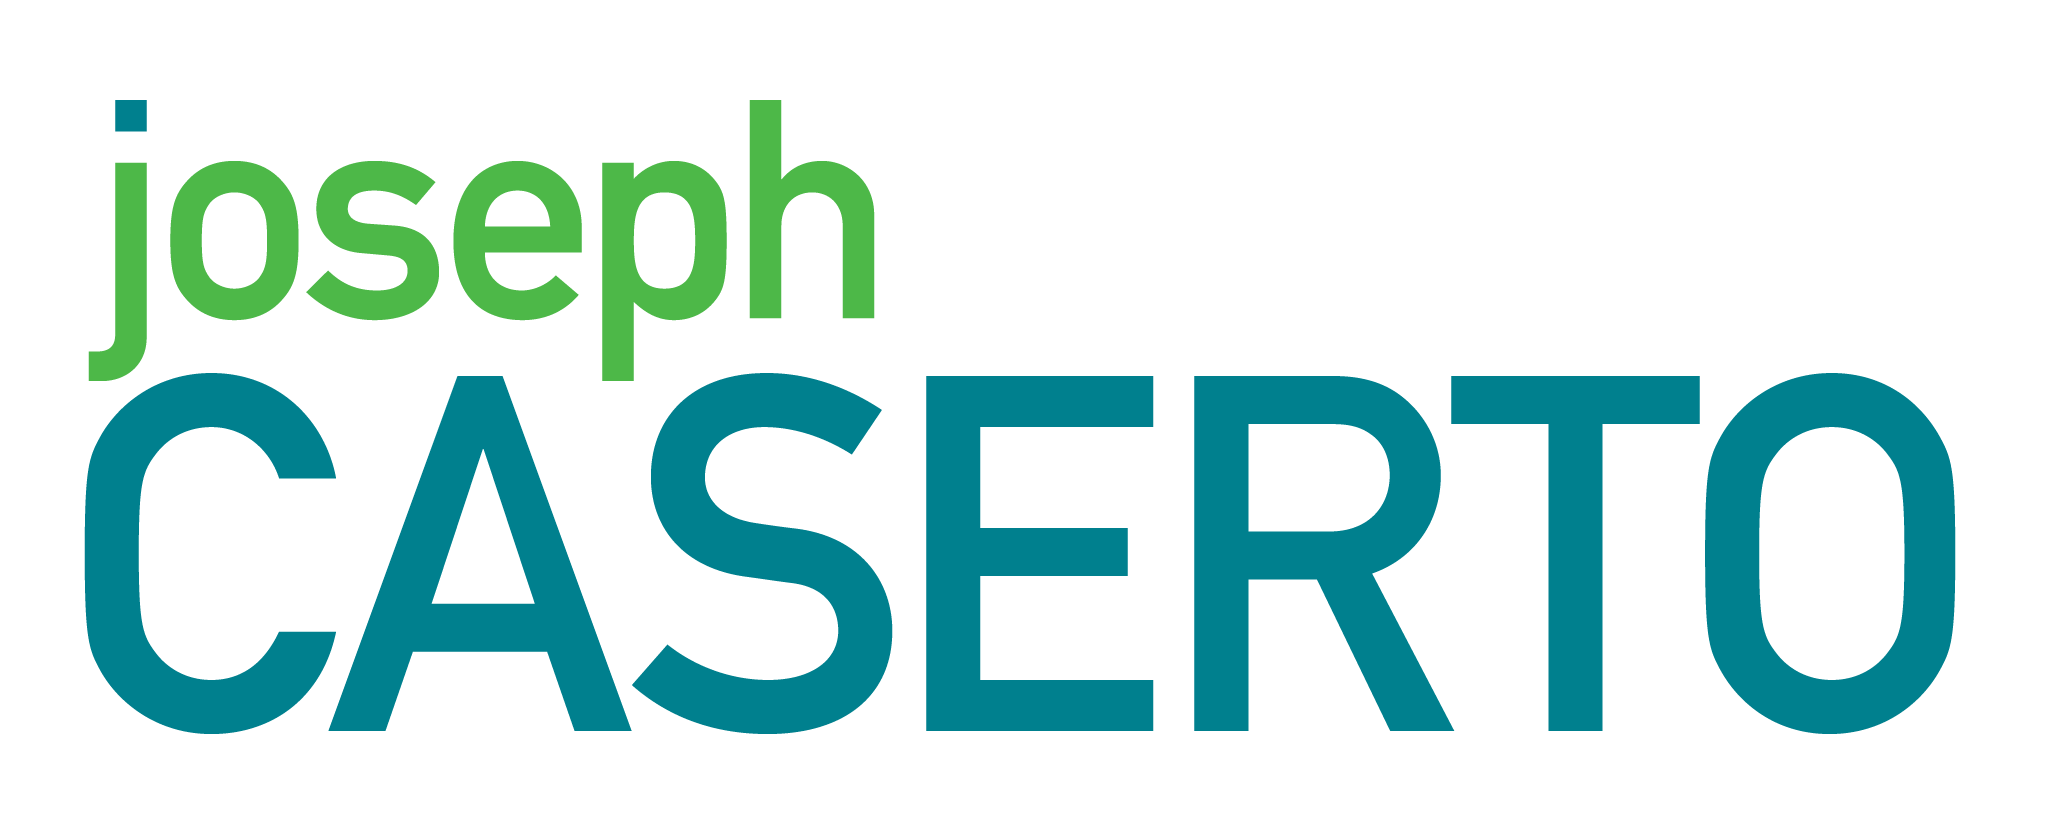 Joseph Caserto logo